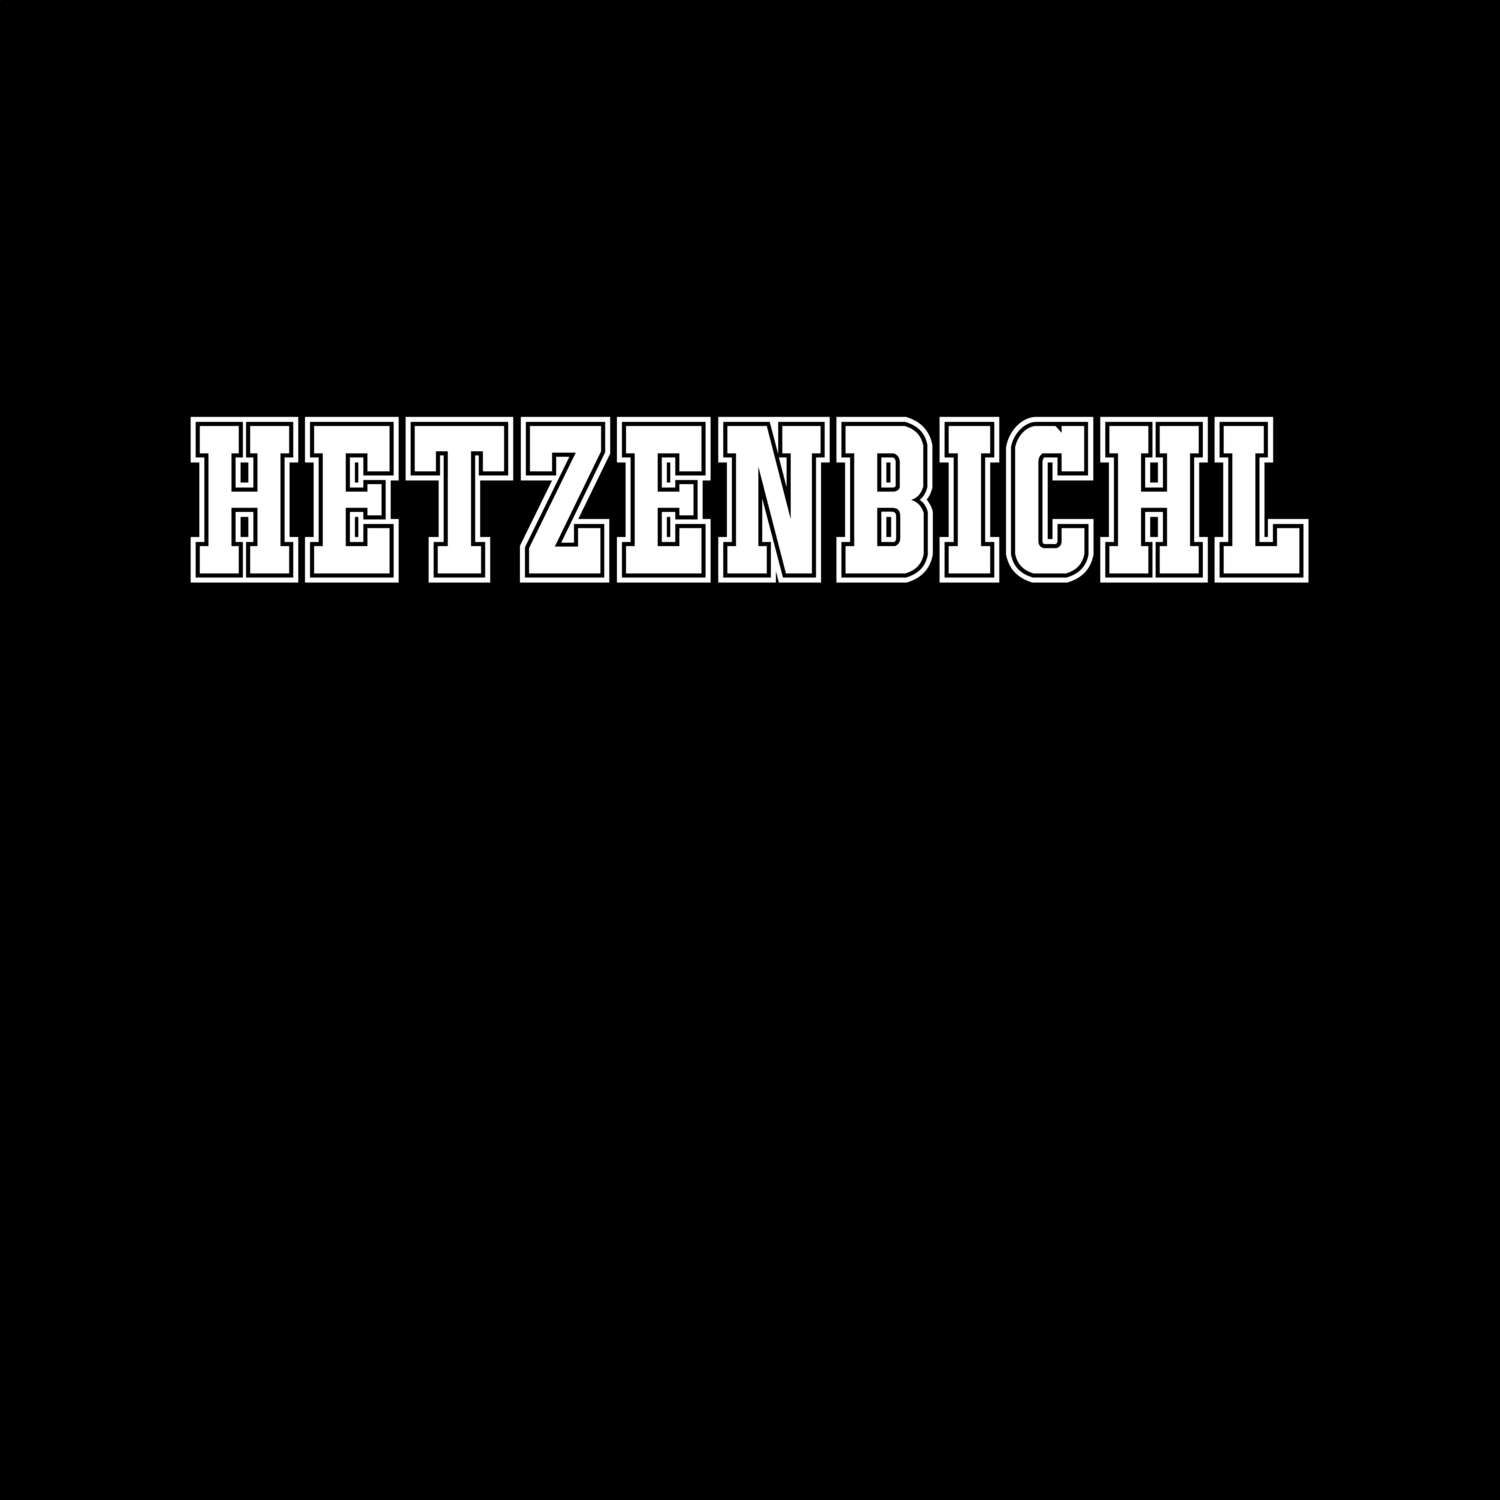 Hetzenbichl T-Shirt »Classic«